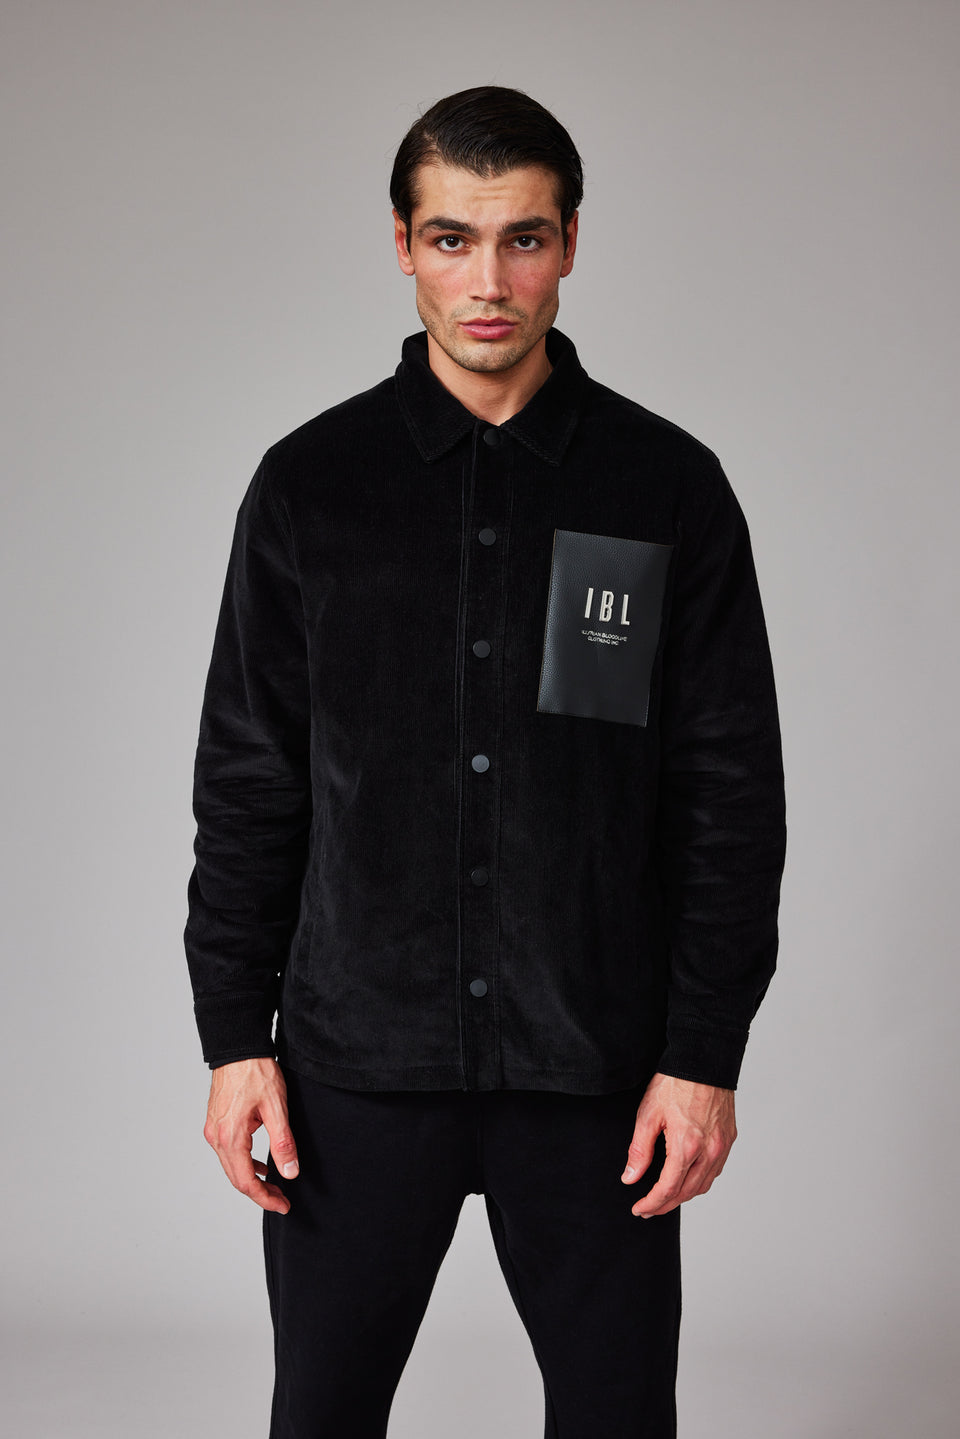 IBL Shirt Jacket - Black